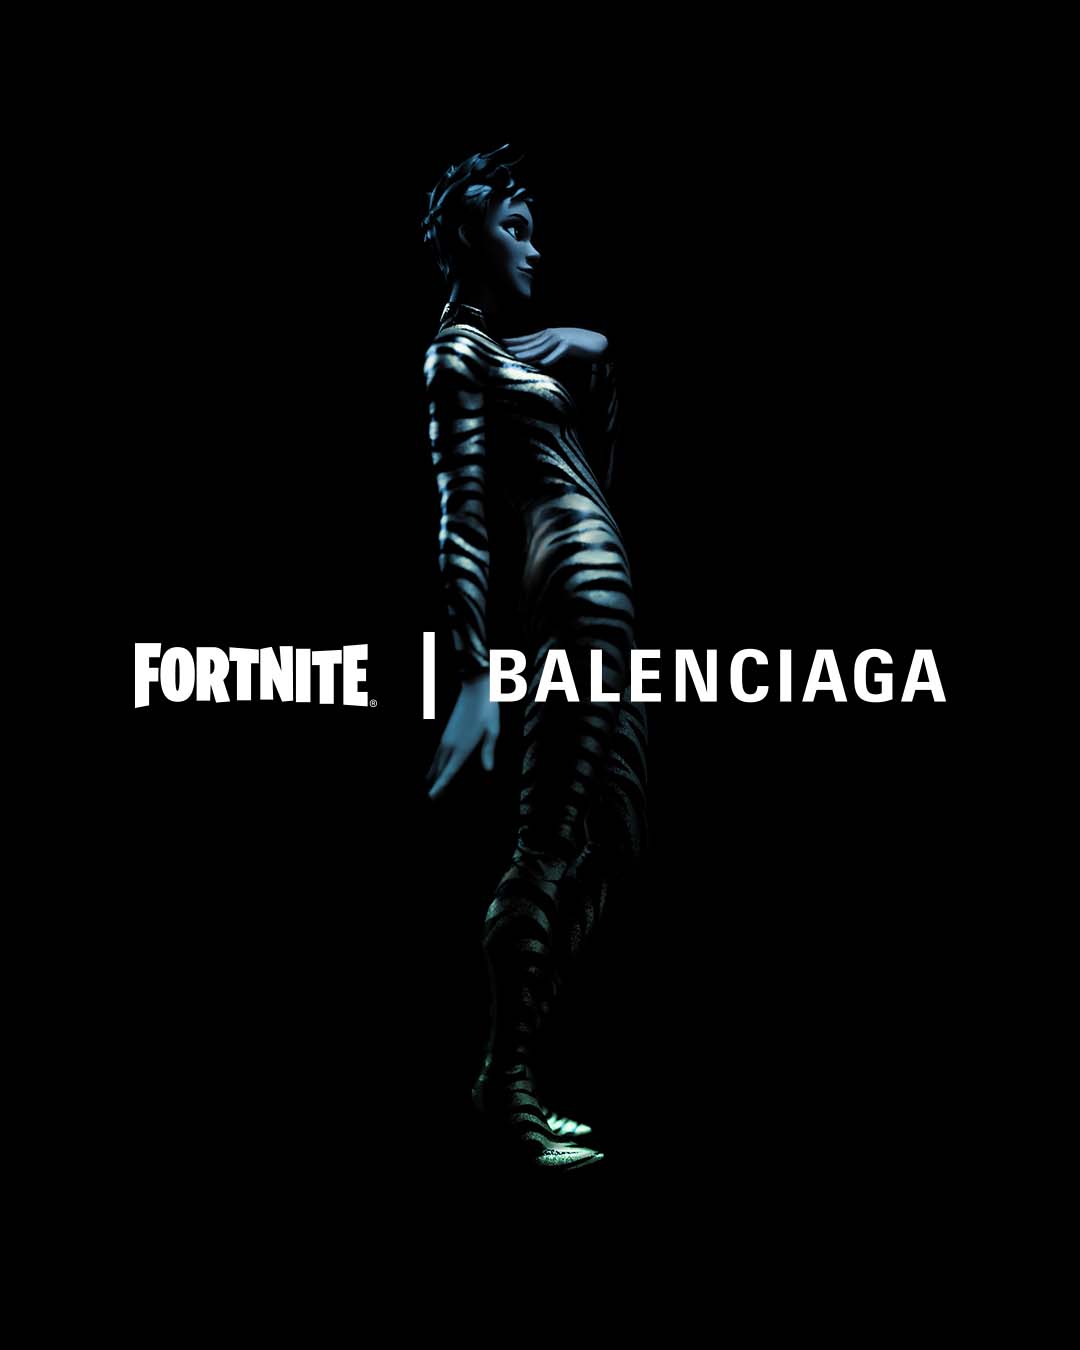 Balenciaga Teams With Fortnite